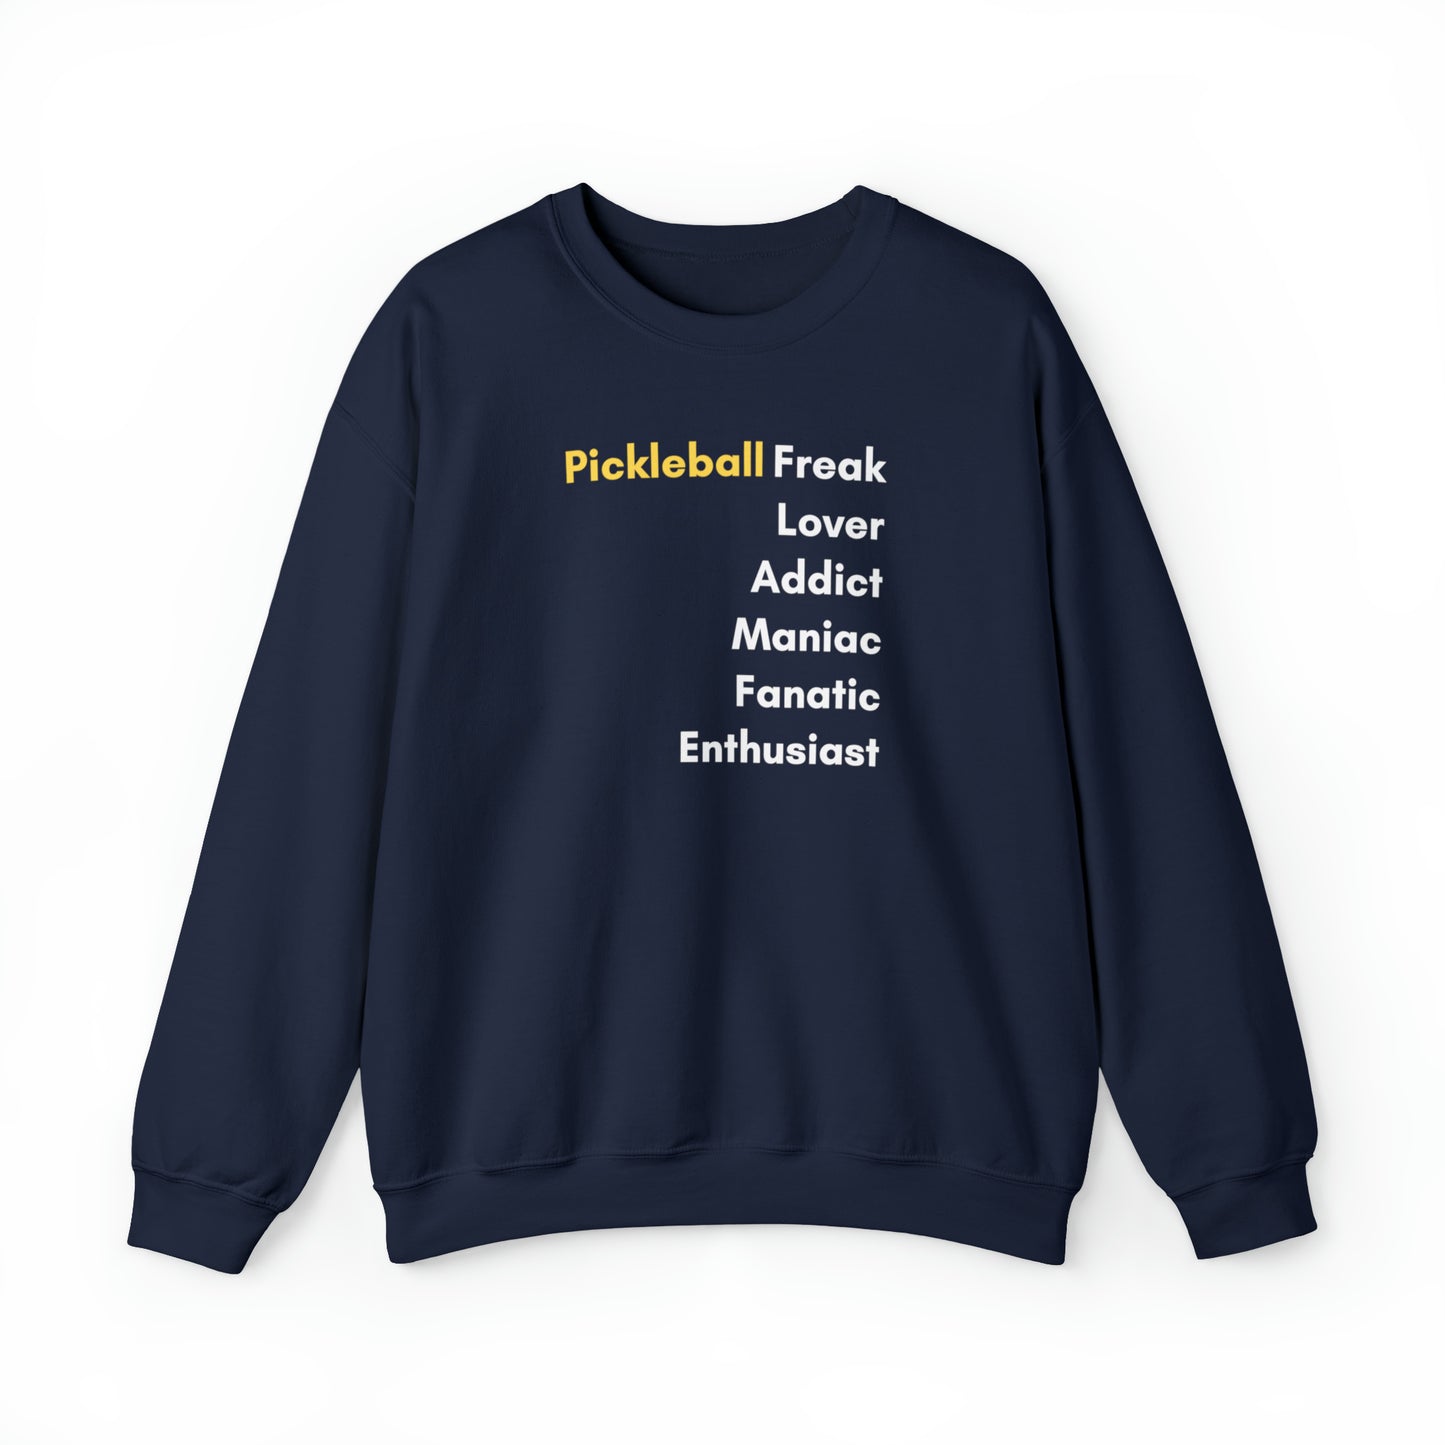 Pickleball Freak Unisex Sweatshirt